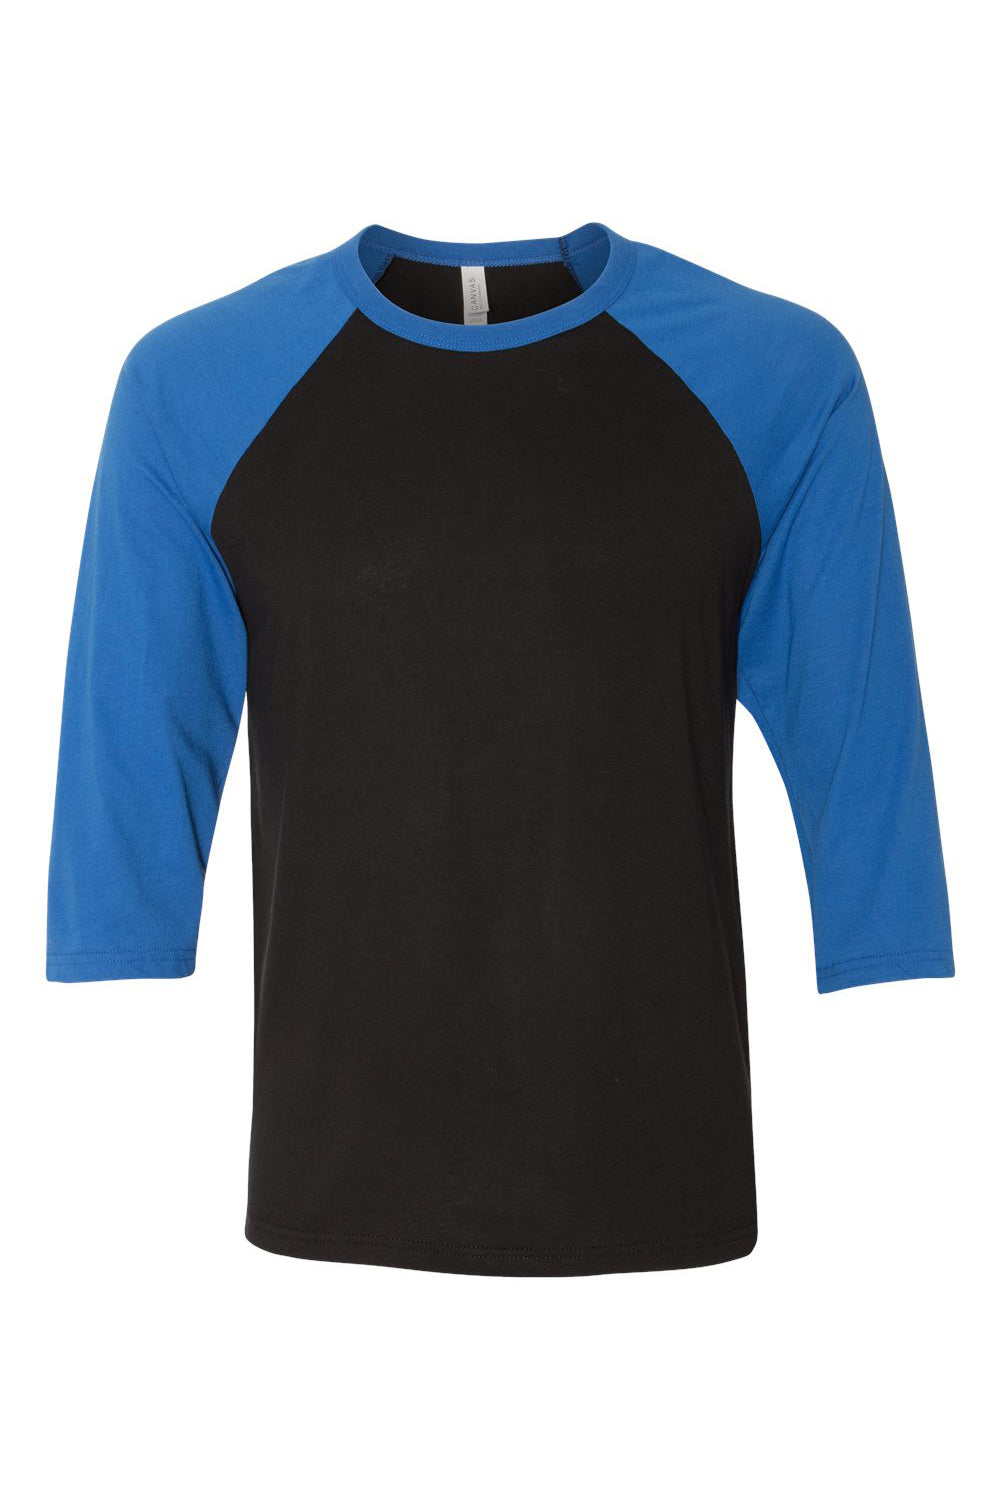 Bella + Canvas BC3200/3200 Mens 3/4 Sleeve Crewneck T-Shirt Black/Royal Blue Flat Front